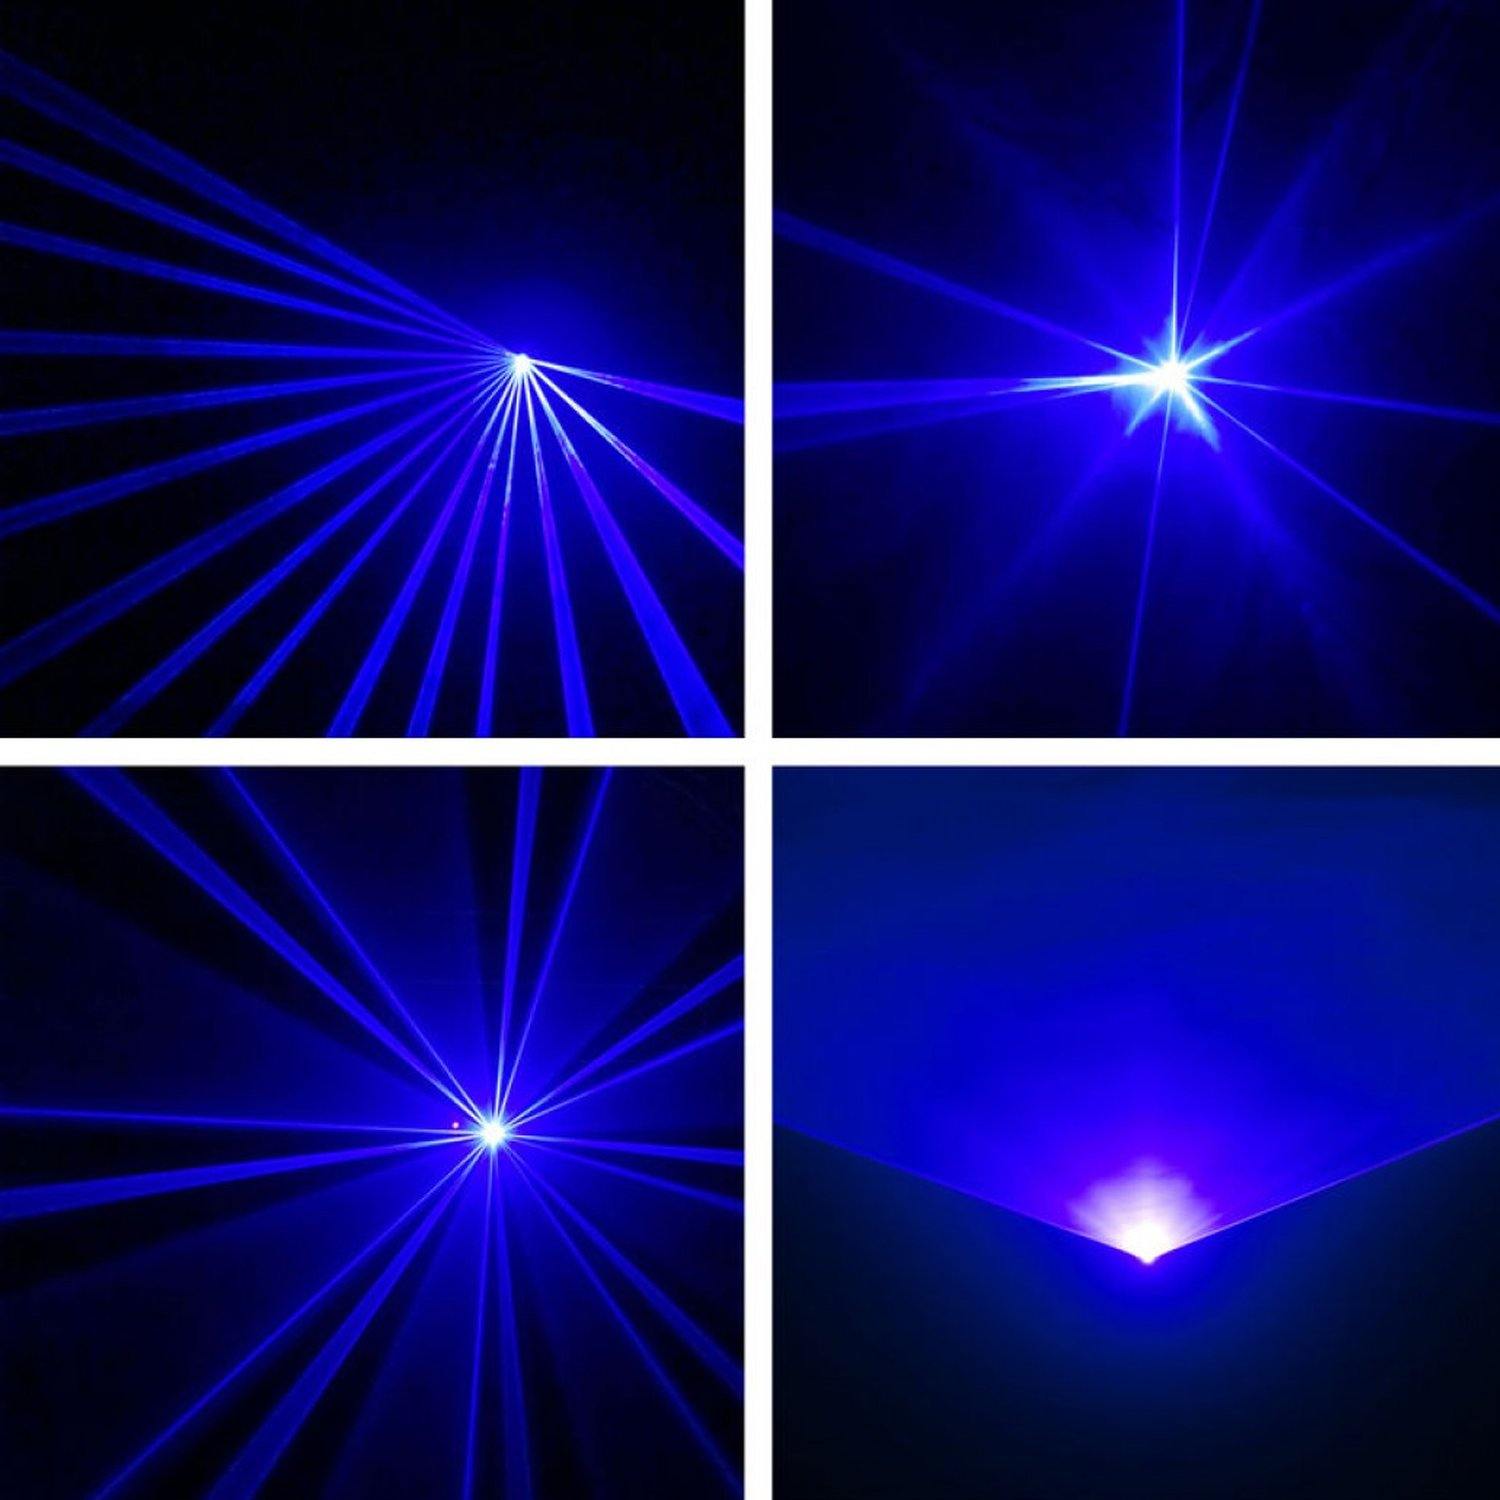 KAM iLink 750B Blue 500mW Laser Lighting Effect - DY Pro Audio